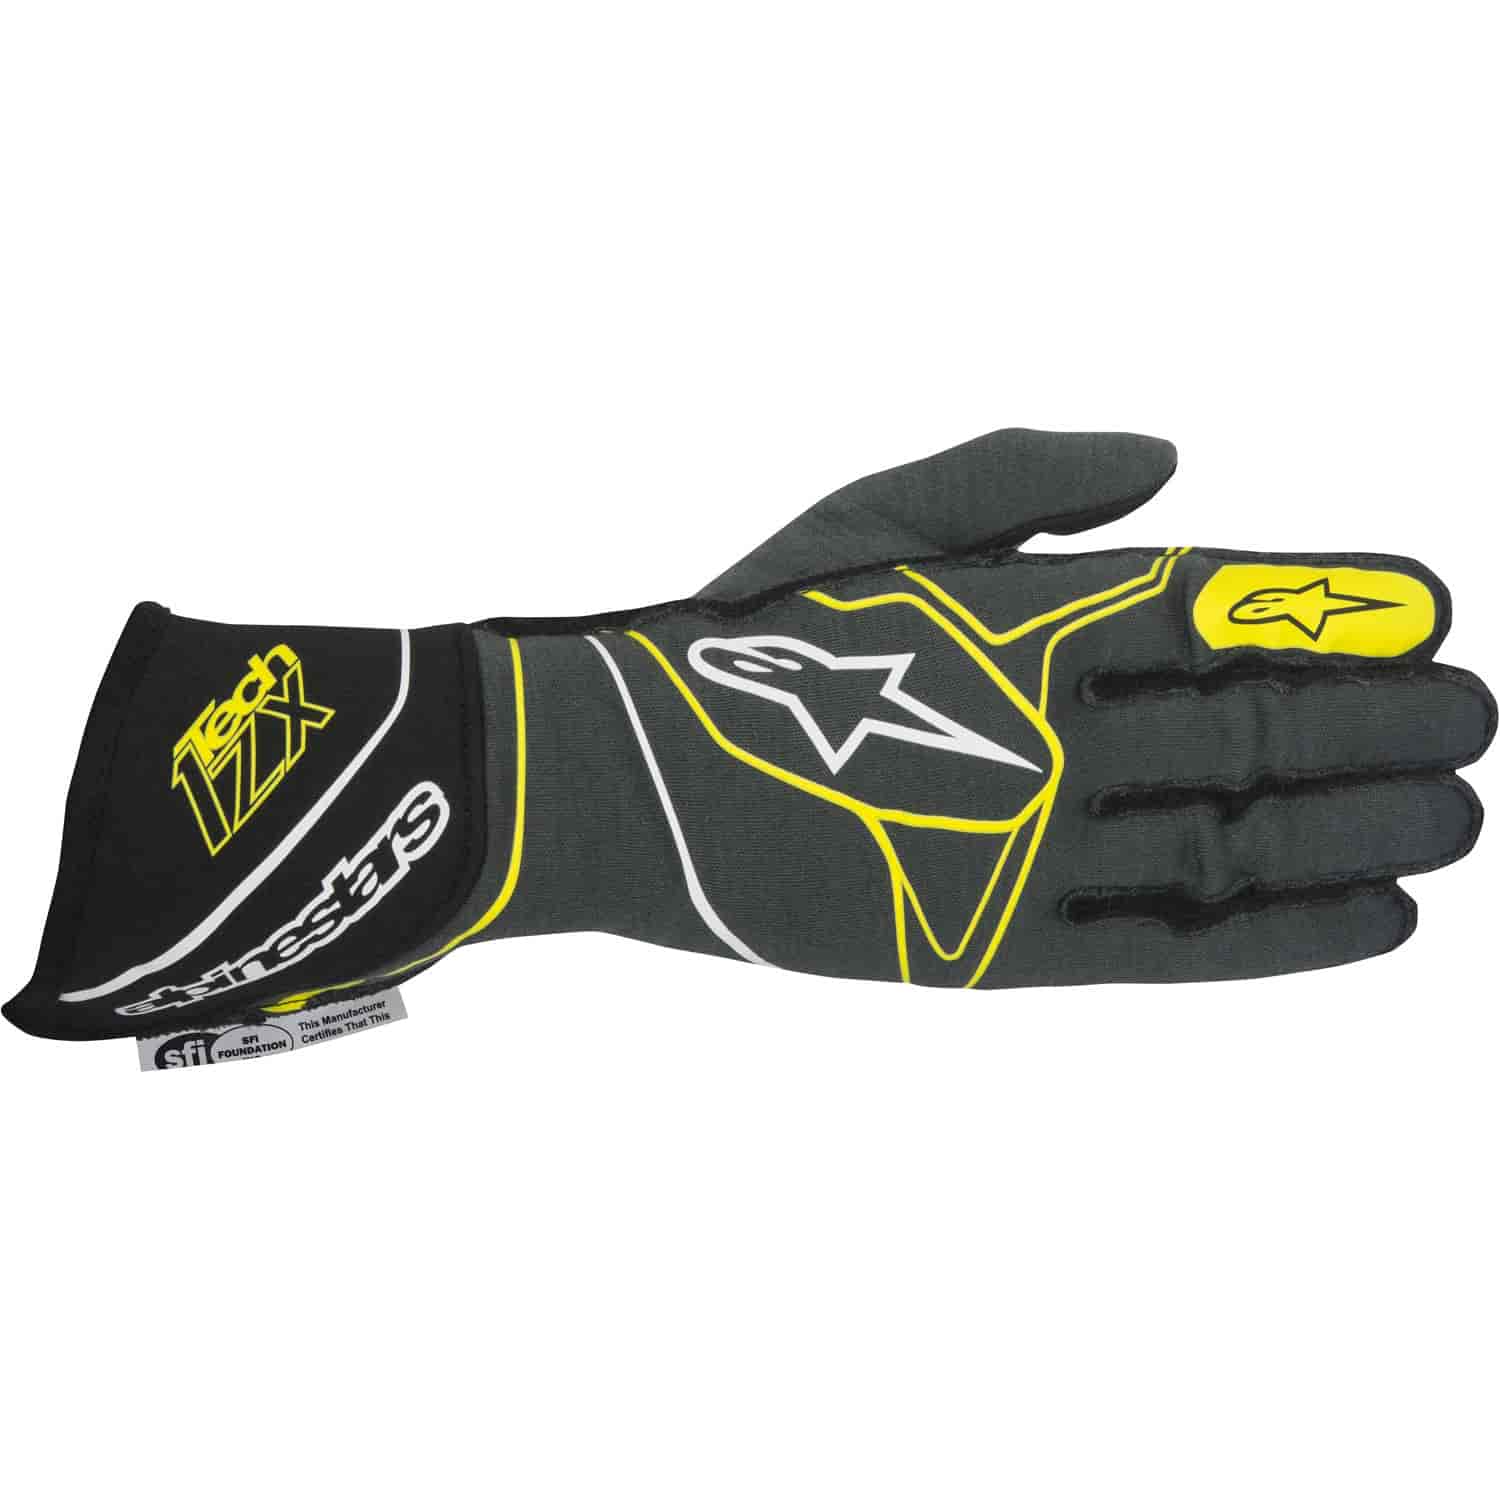 Tech 1-ZX Glove Anthracite/Black/Yellow SFI 3.3/5